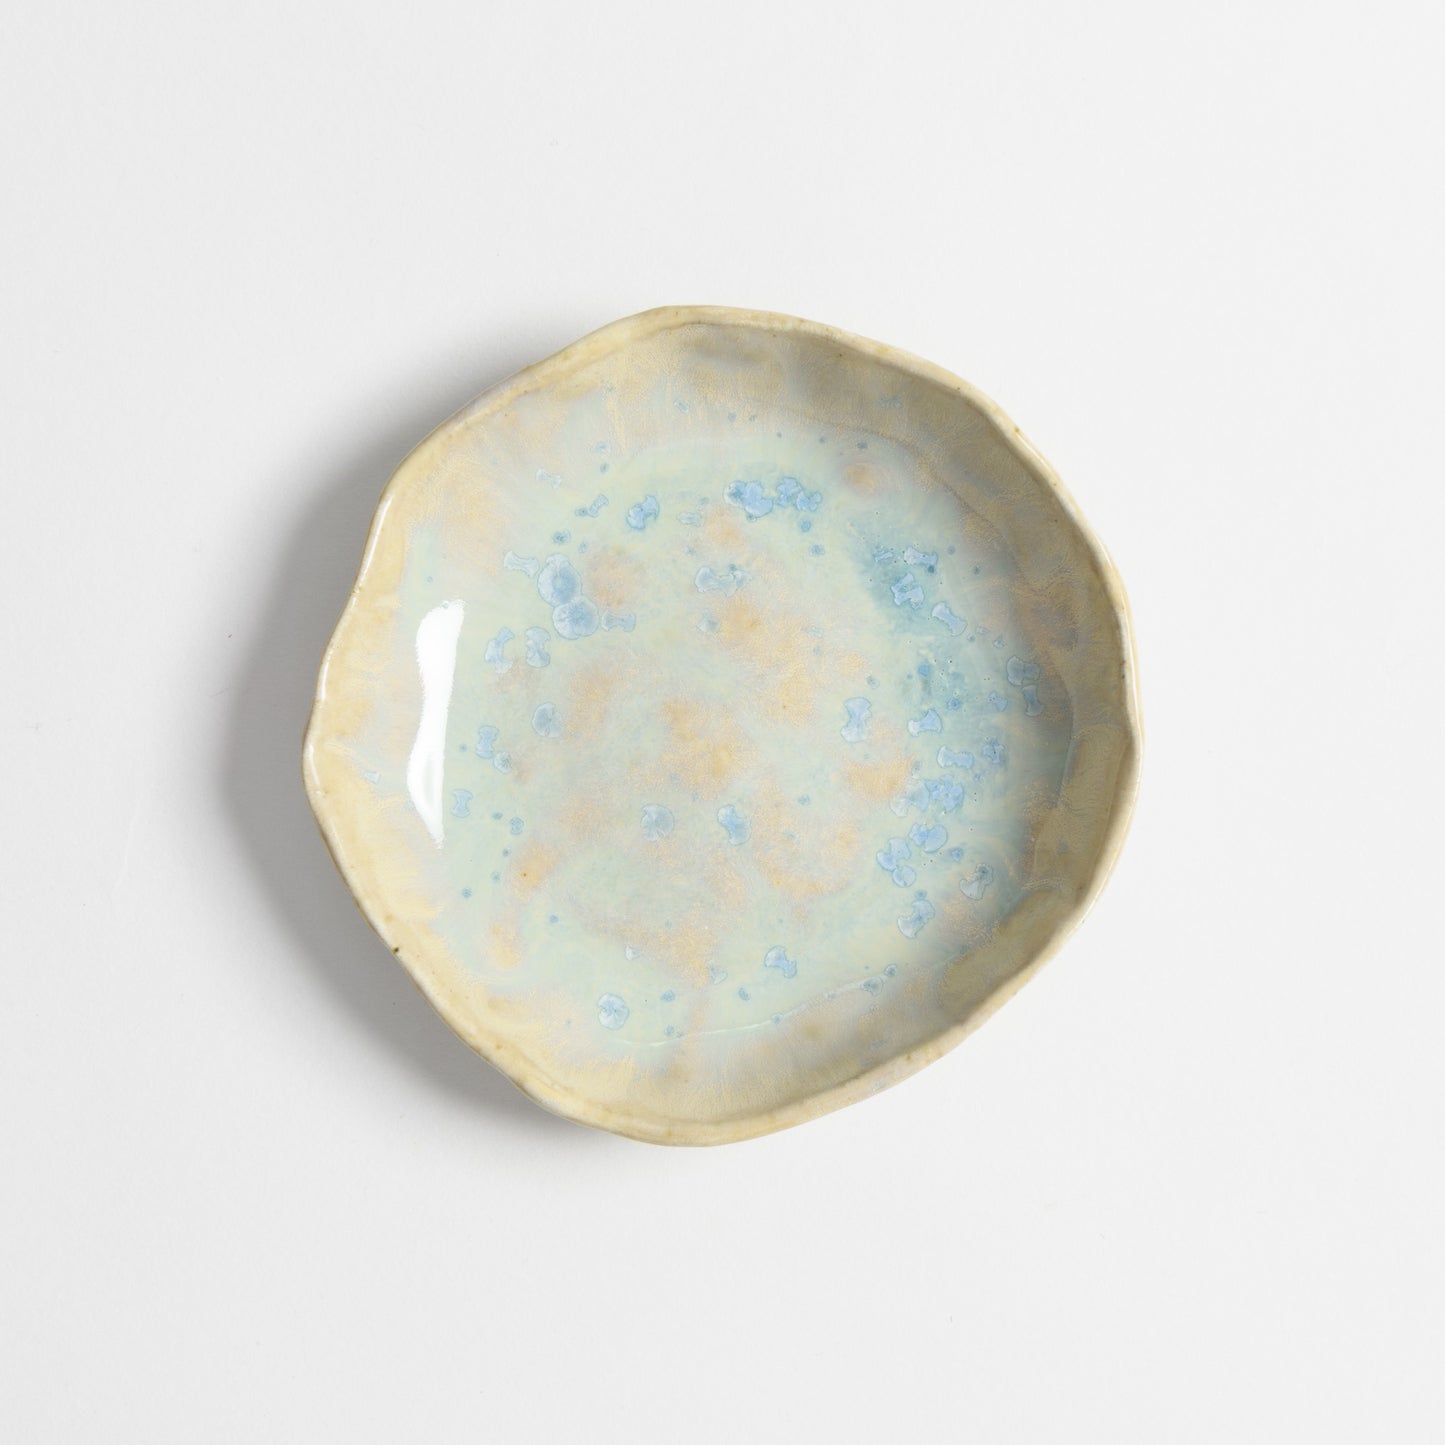 Jewellery Dish - Mermaid Opal